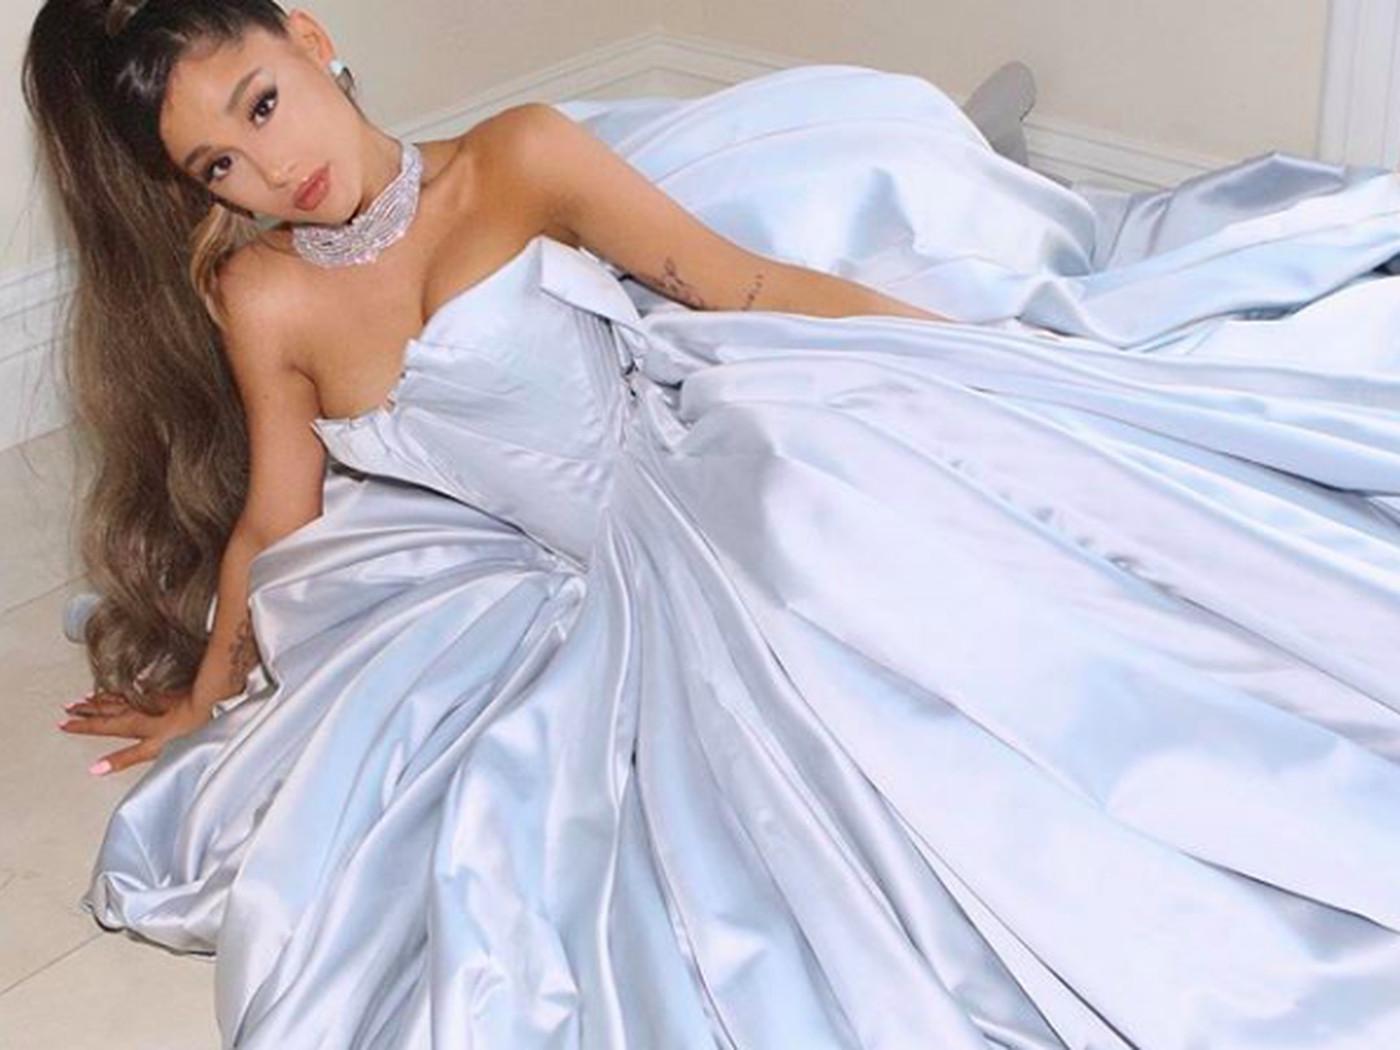 Grammys 2019: Ariana Grande wins first award, Instagrams